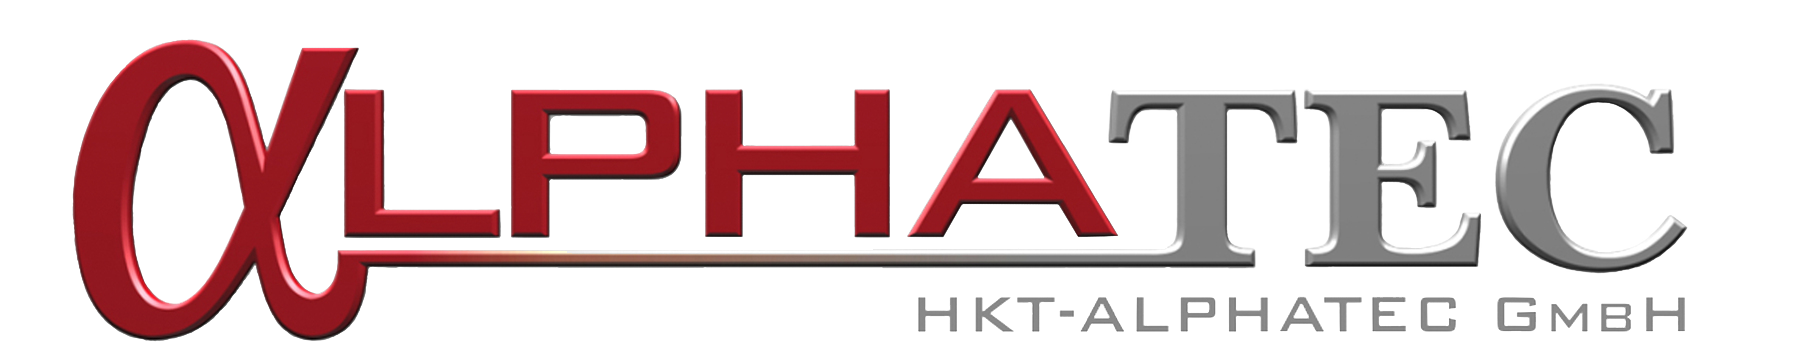 HKT ALPHATEC GMBH - Logo